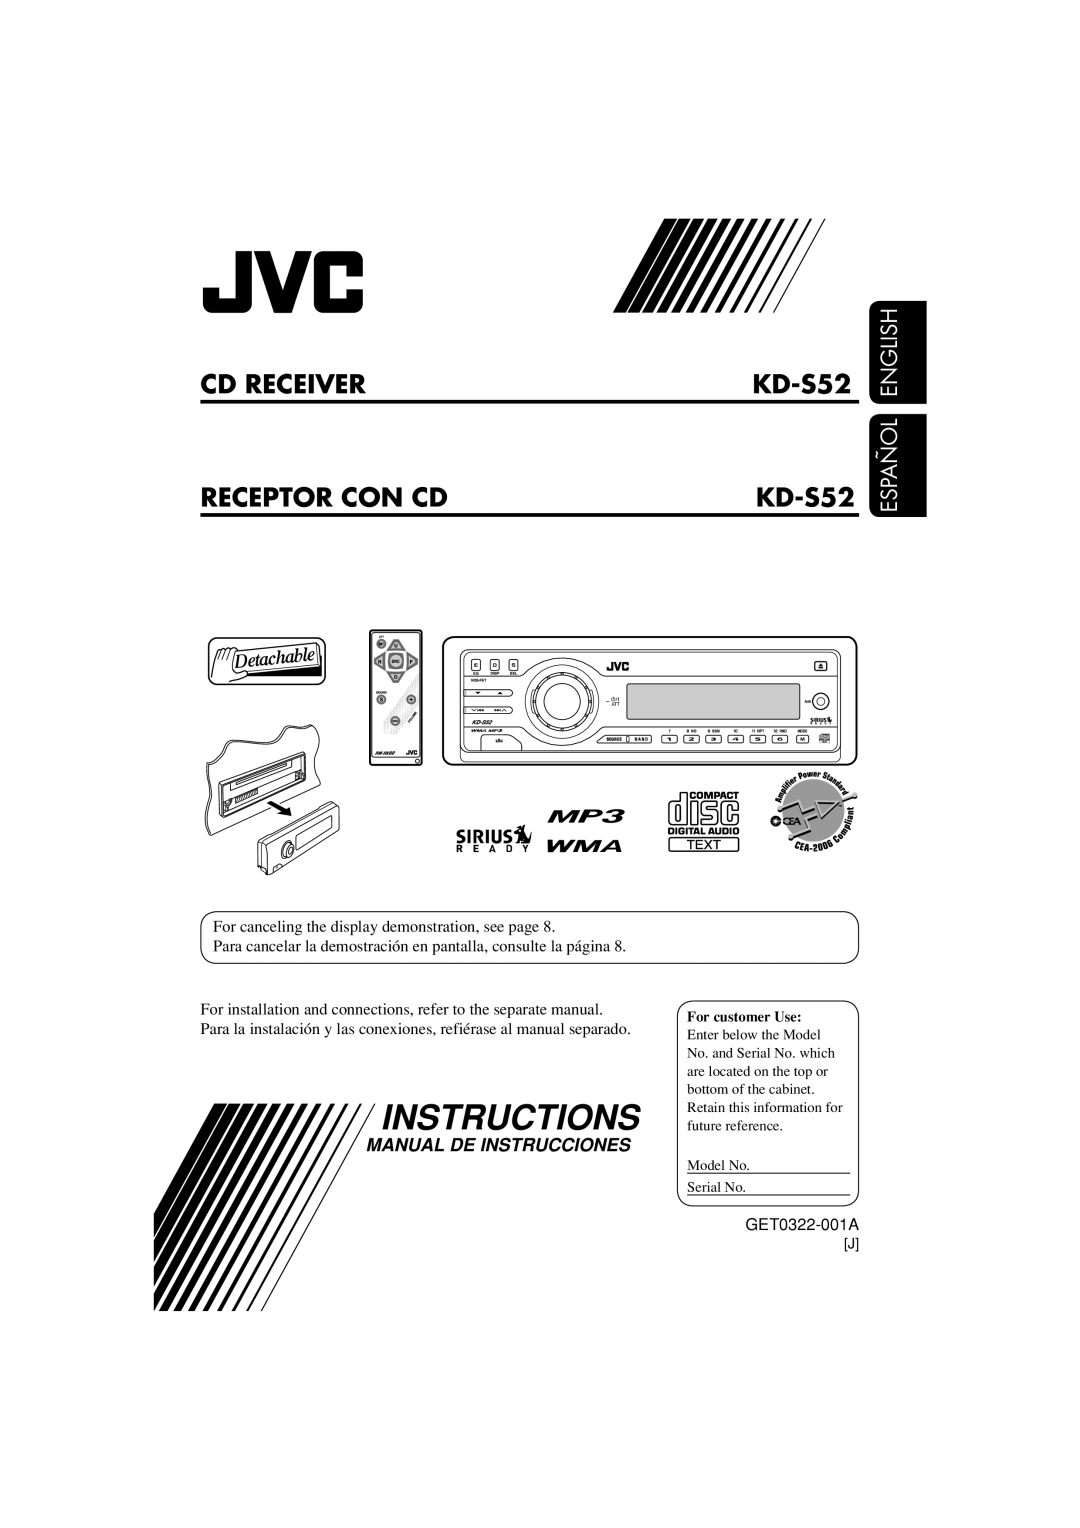 JVC manual Cd Receiver Receptor Con Cd, KD-S52 KD-S52, Español English, Instructions, Manual De Instrucciones 